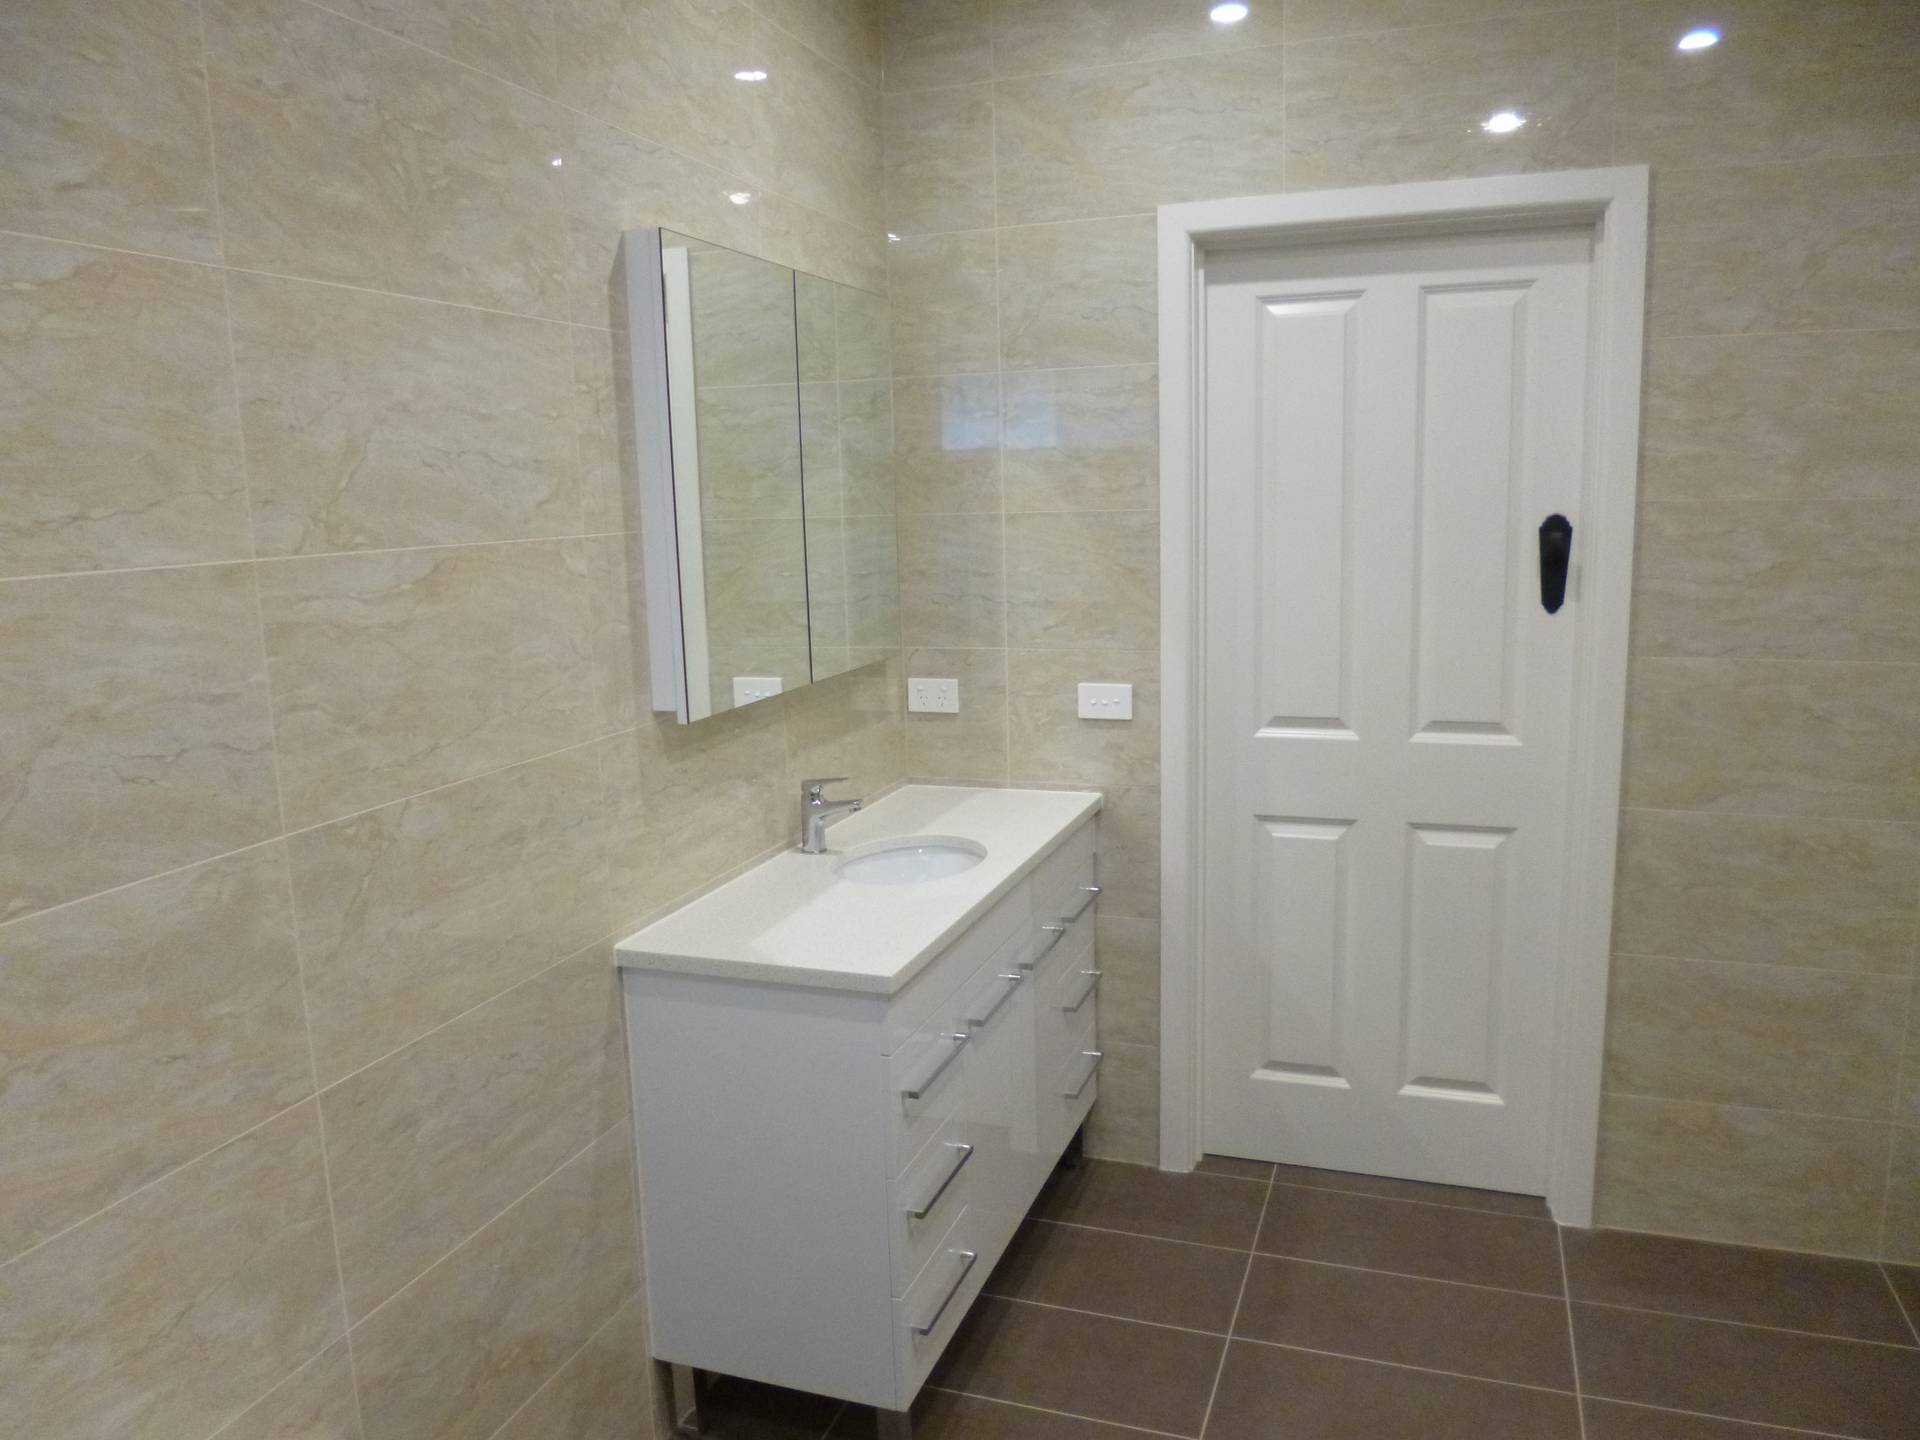 Bathroom vanity and shaving cabinet.